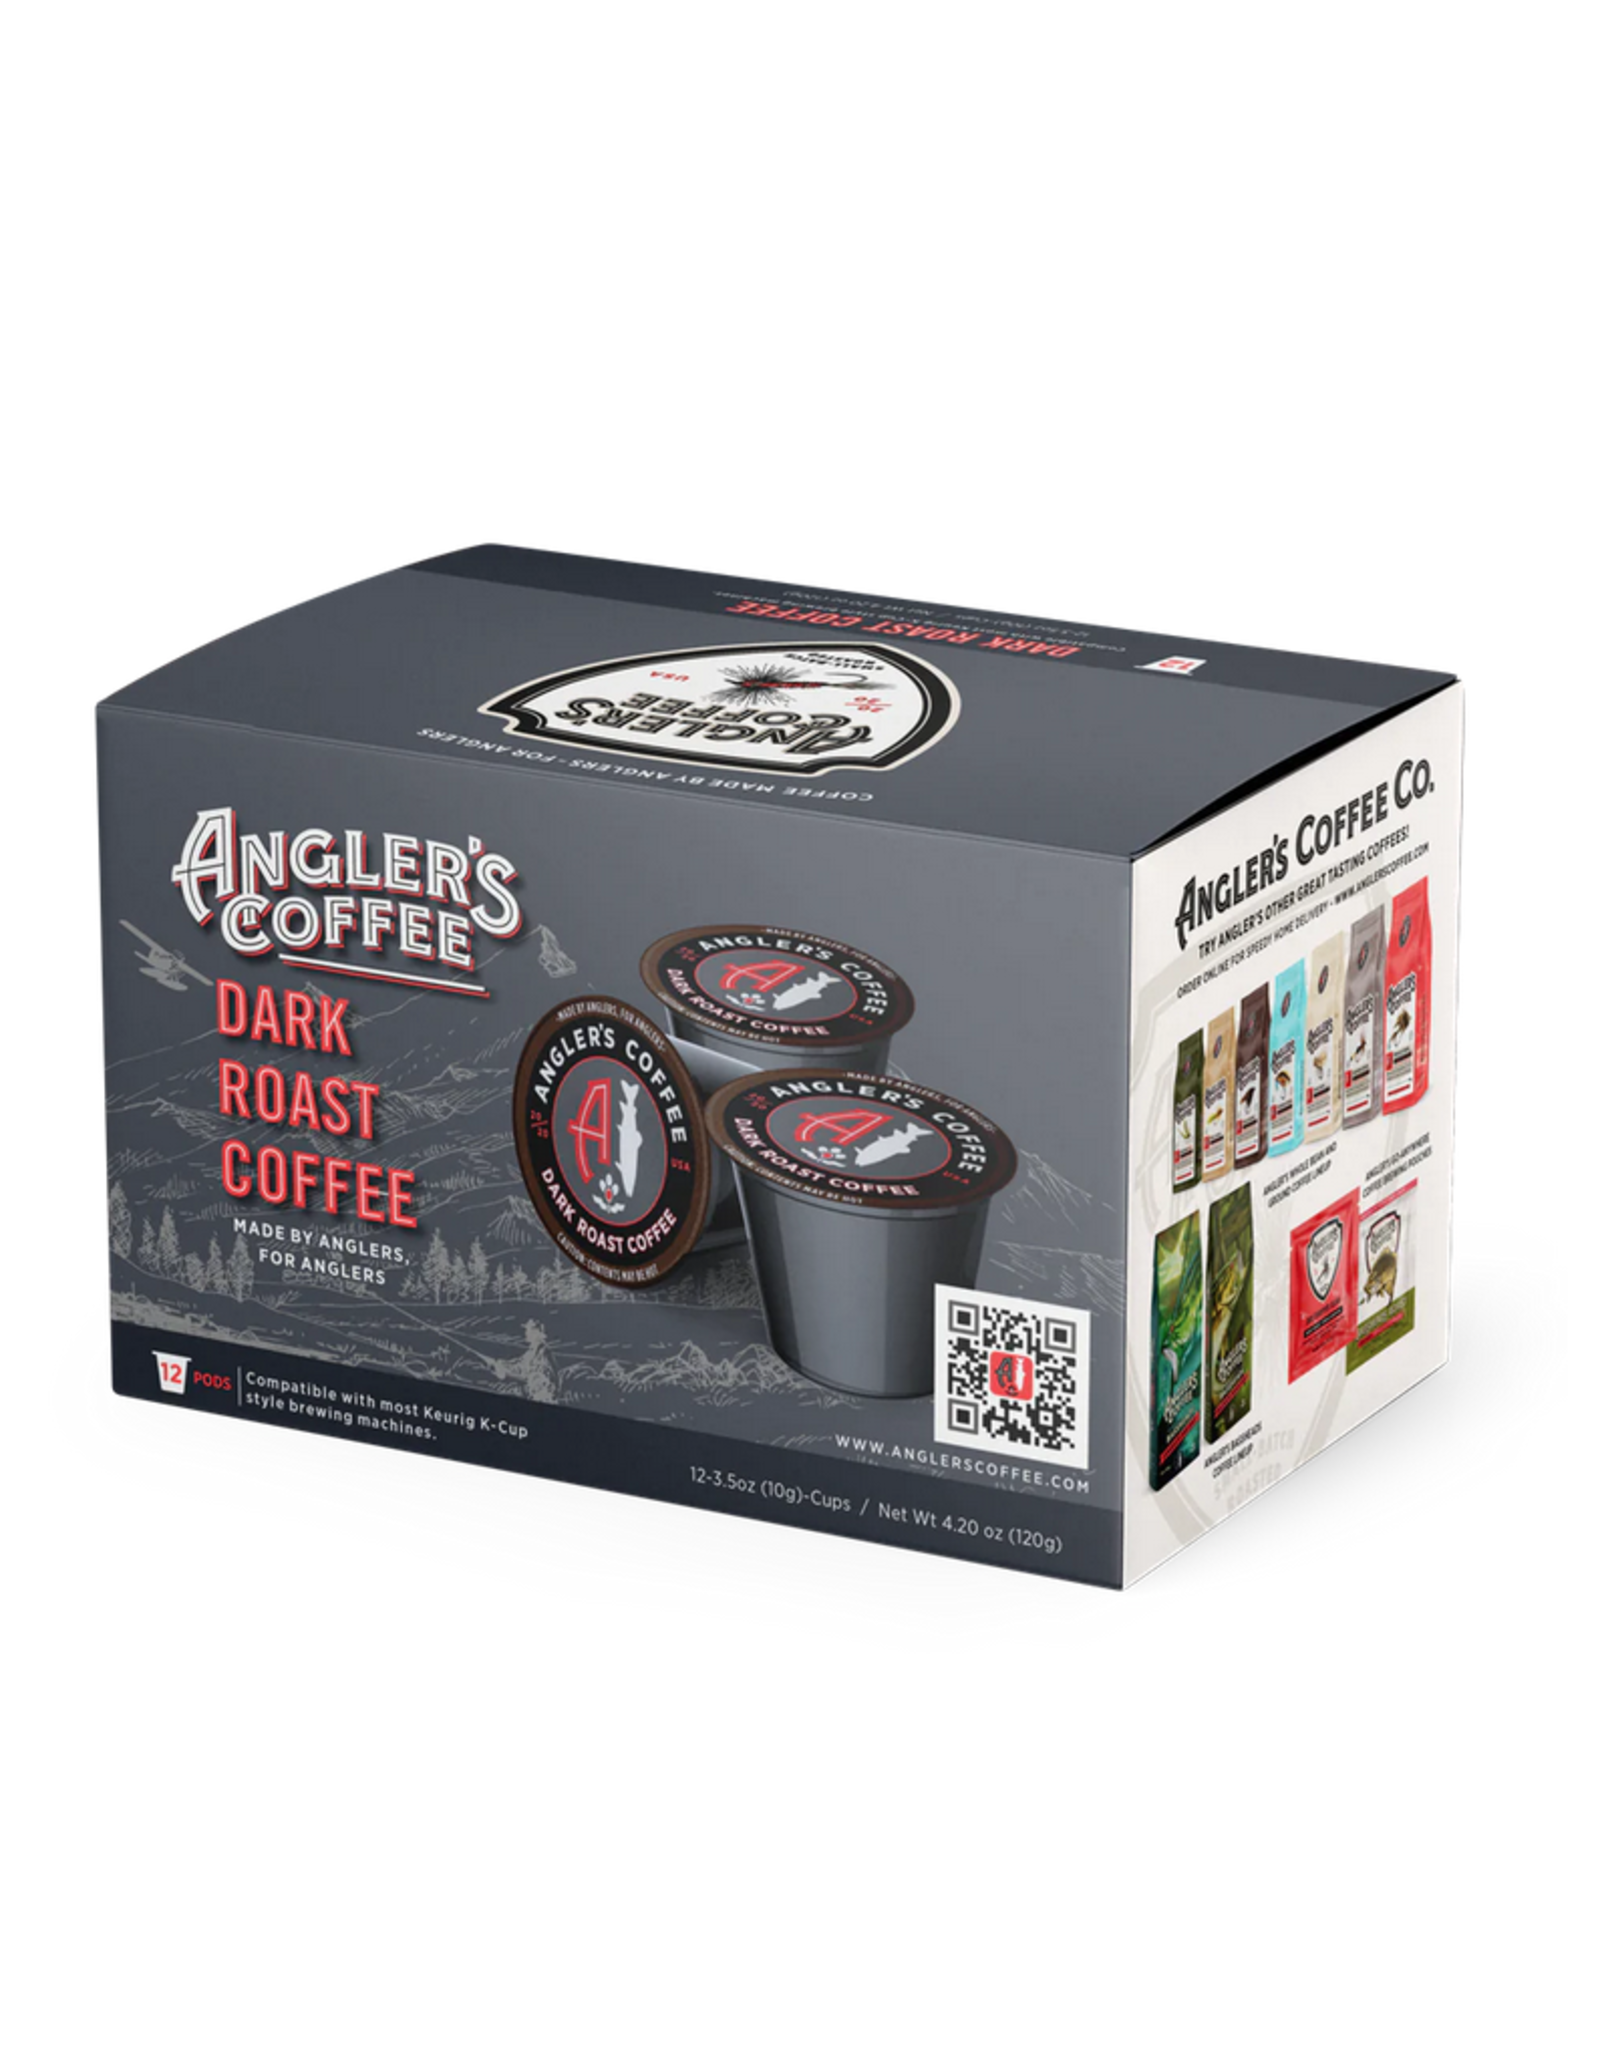 Angler's Coffee Angler's Coffee Single Serve Coffee Pods